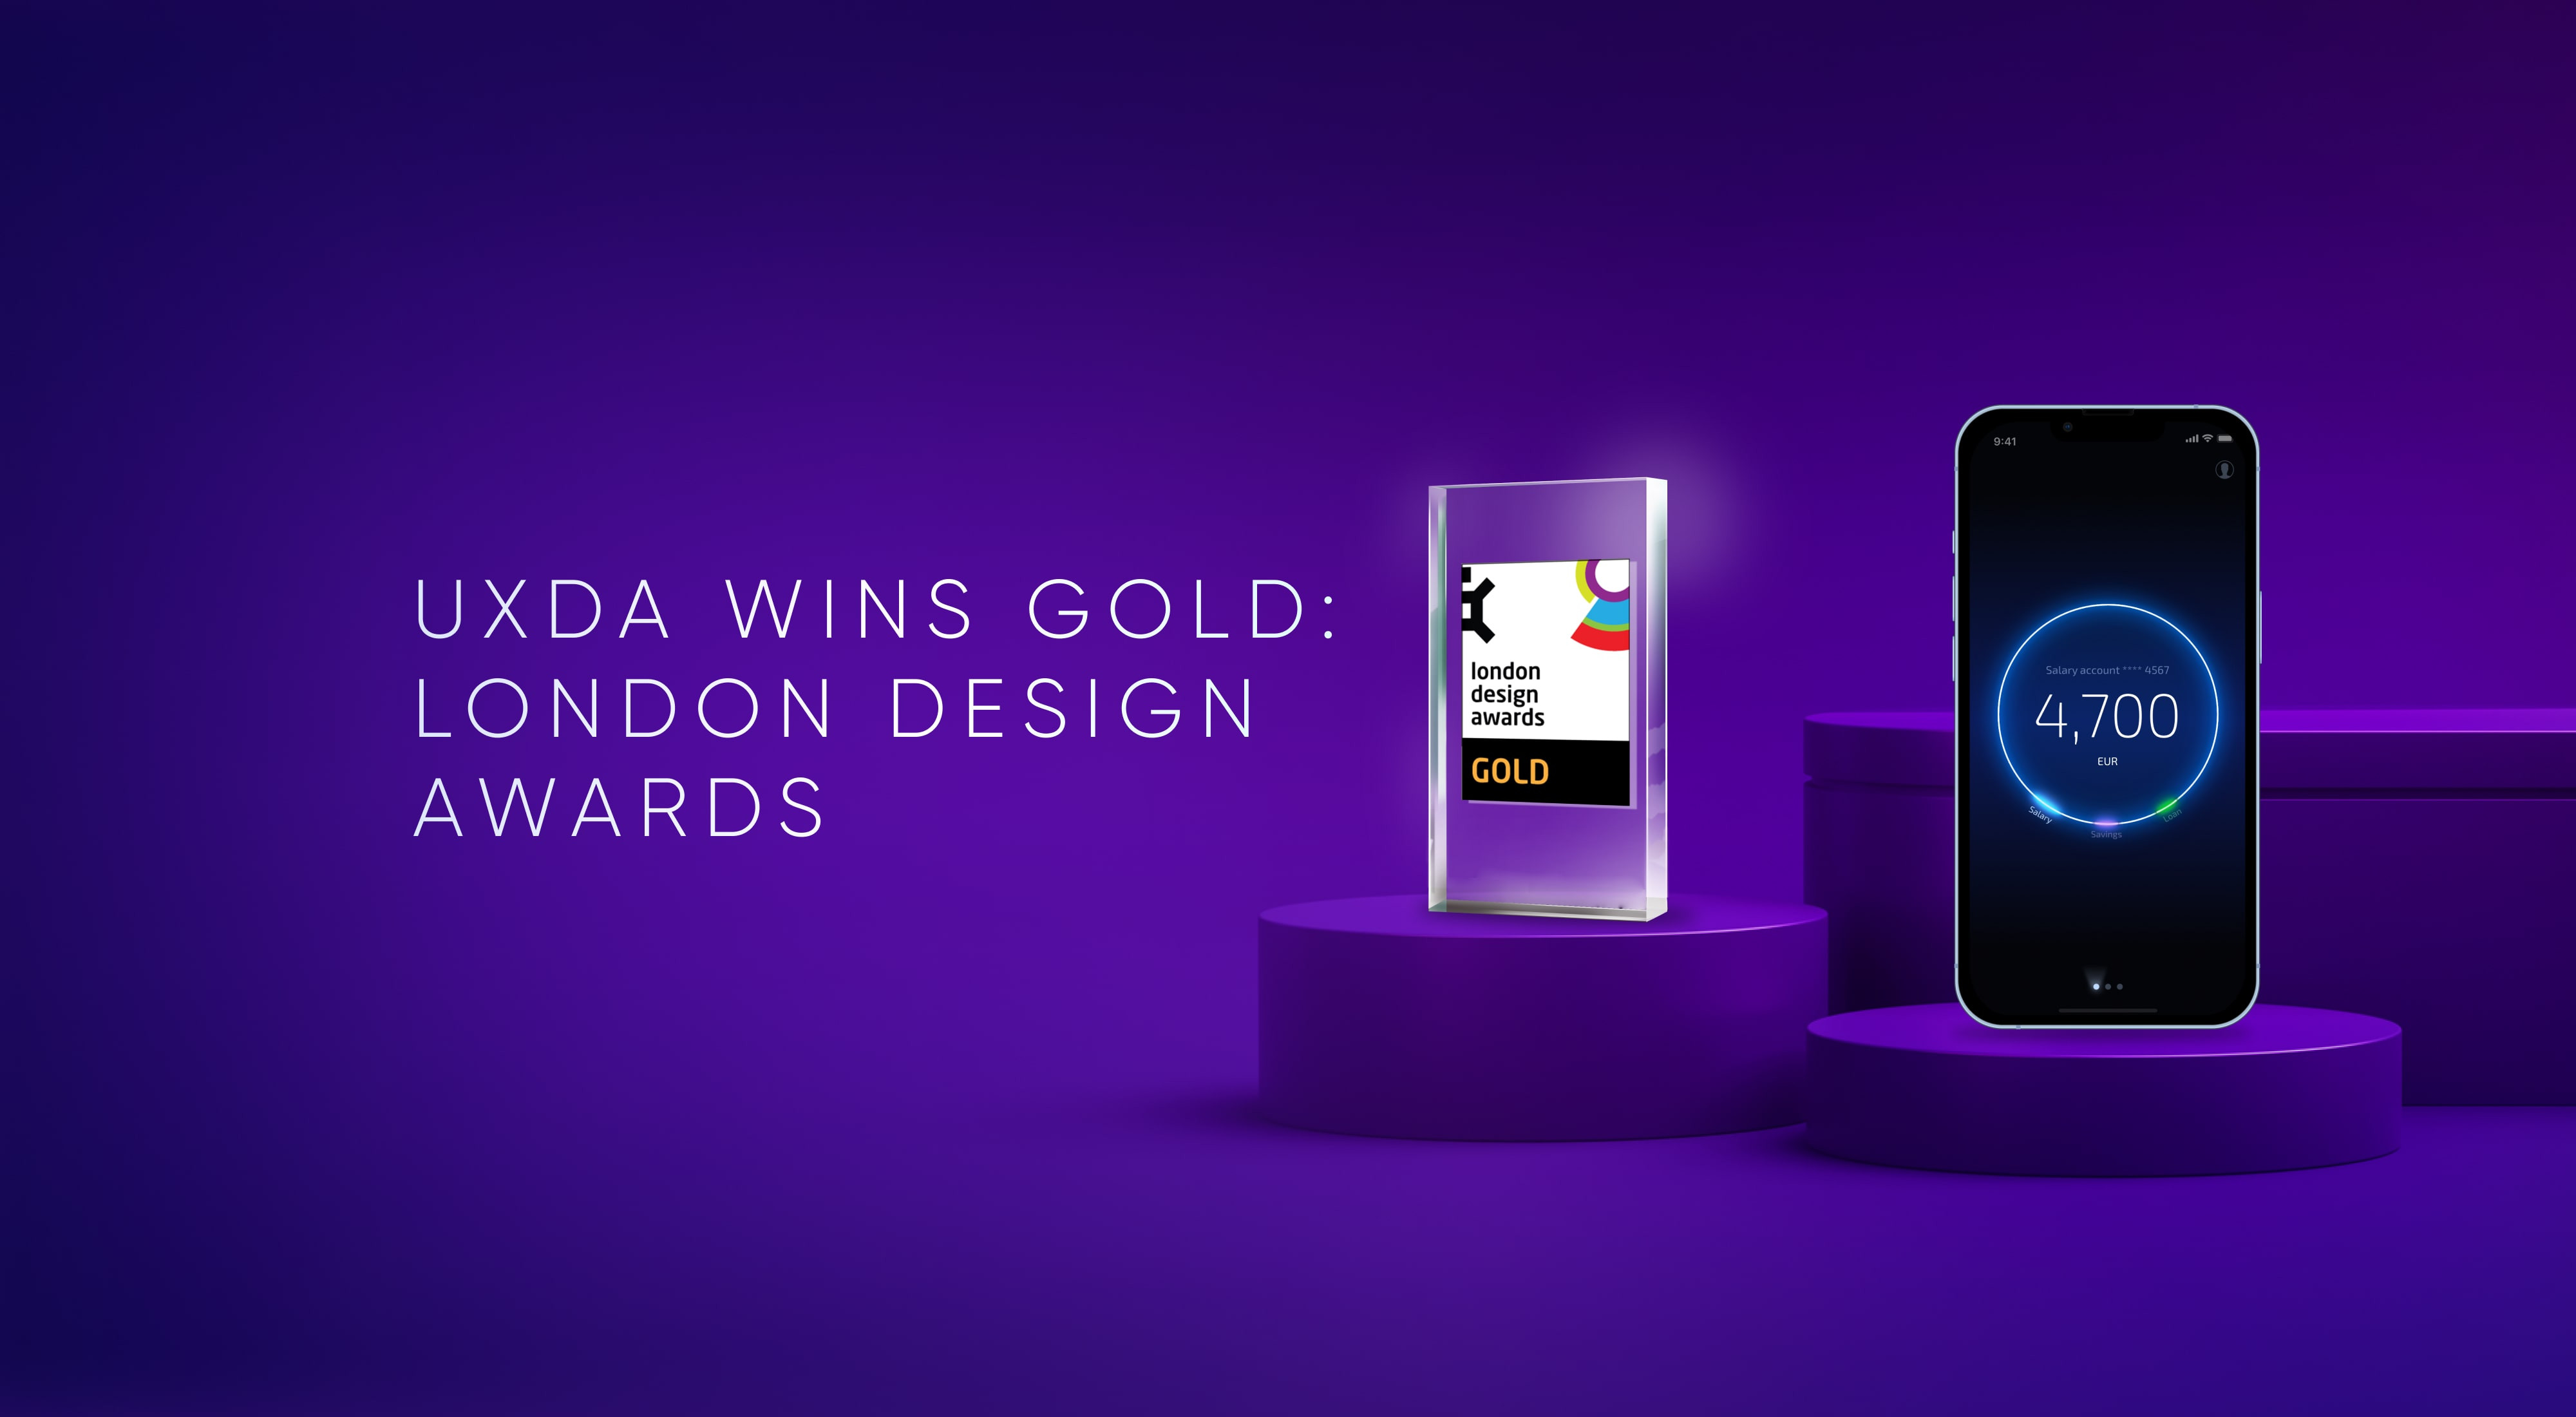 UXDA Wins Gold at the London Design Awards 2018